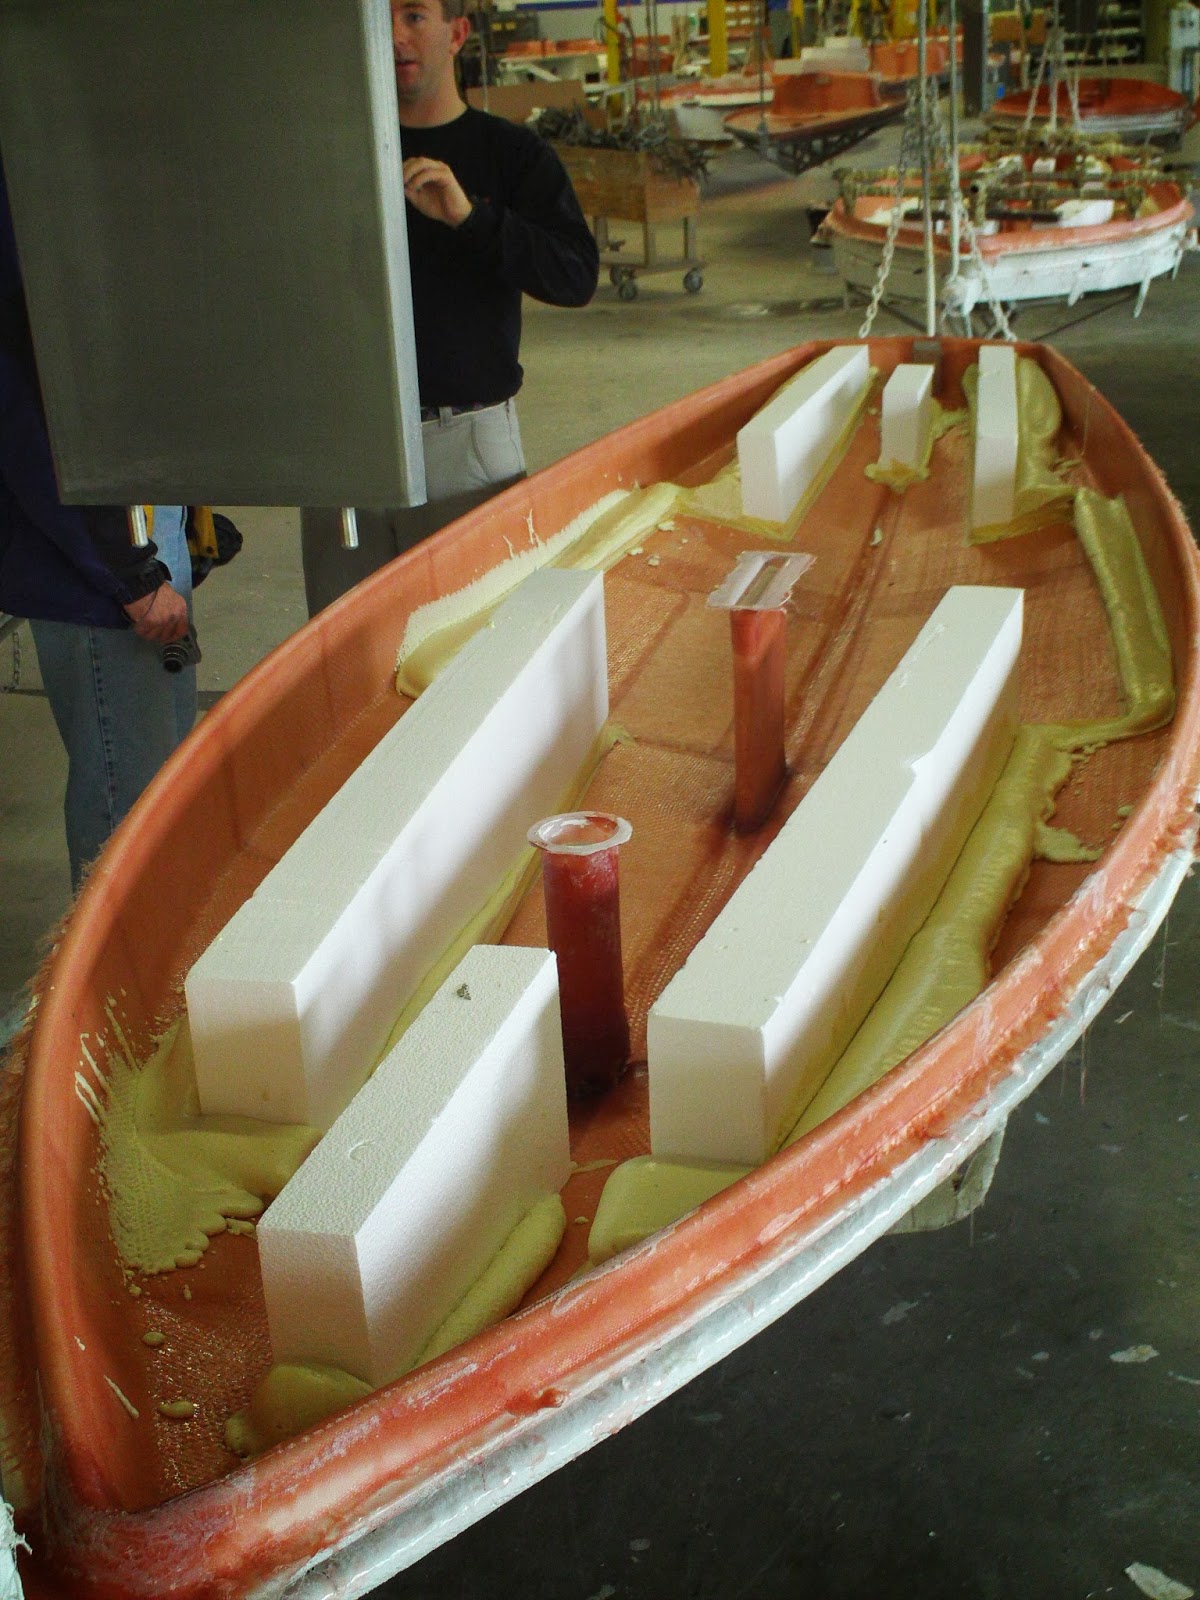 sunfish sailboat rigging diagram